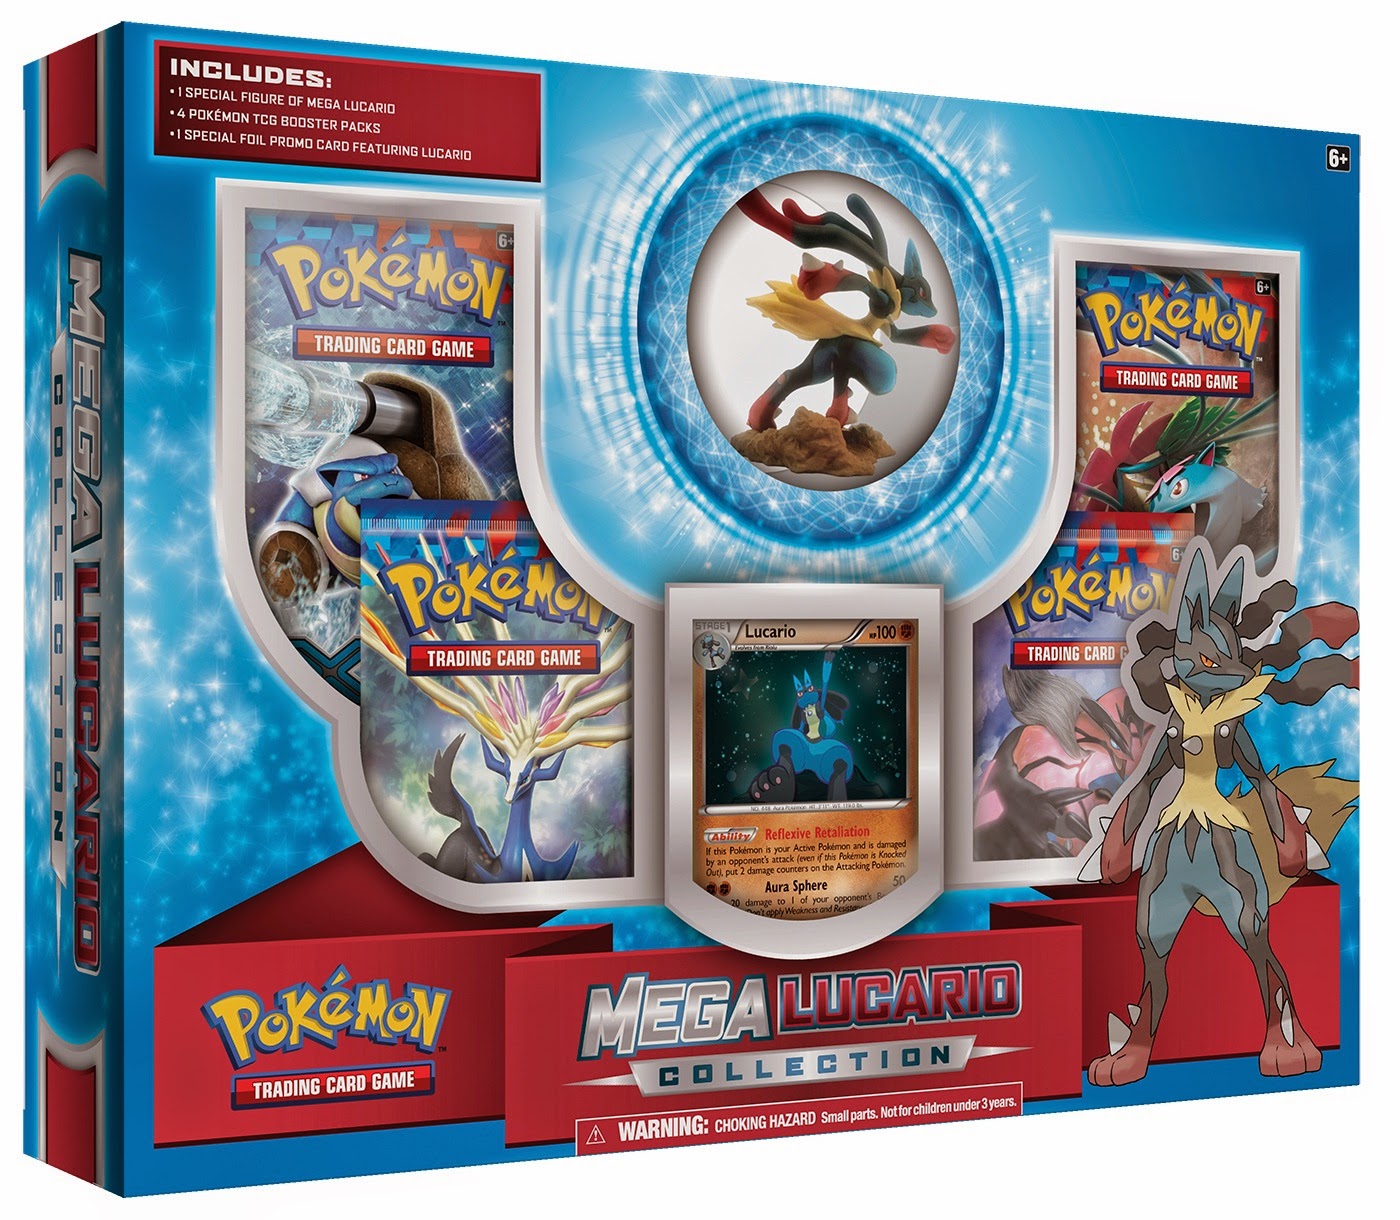 Pokémon: EX Power Trio Tins and Mega Lucario Collection.